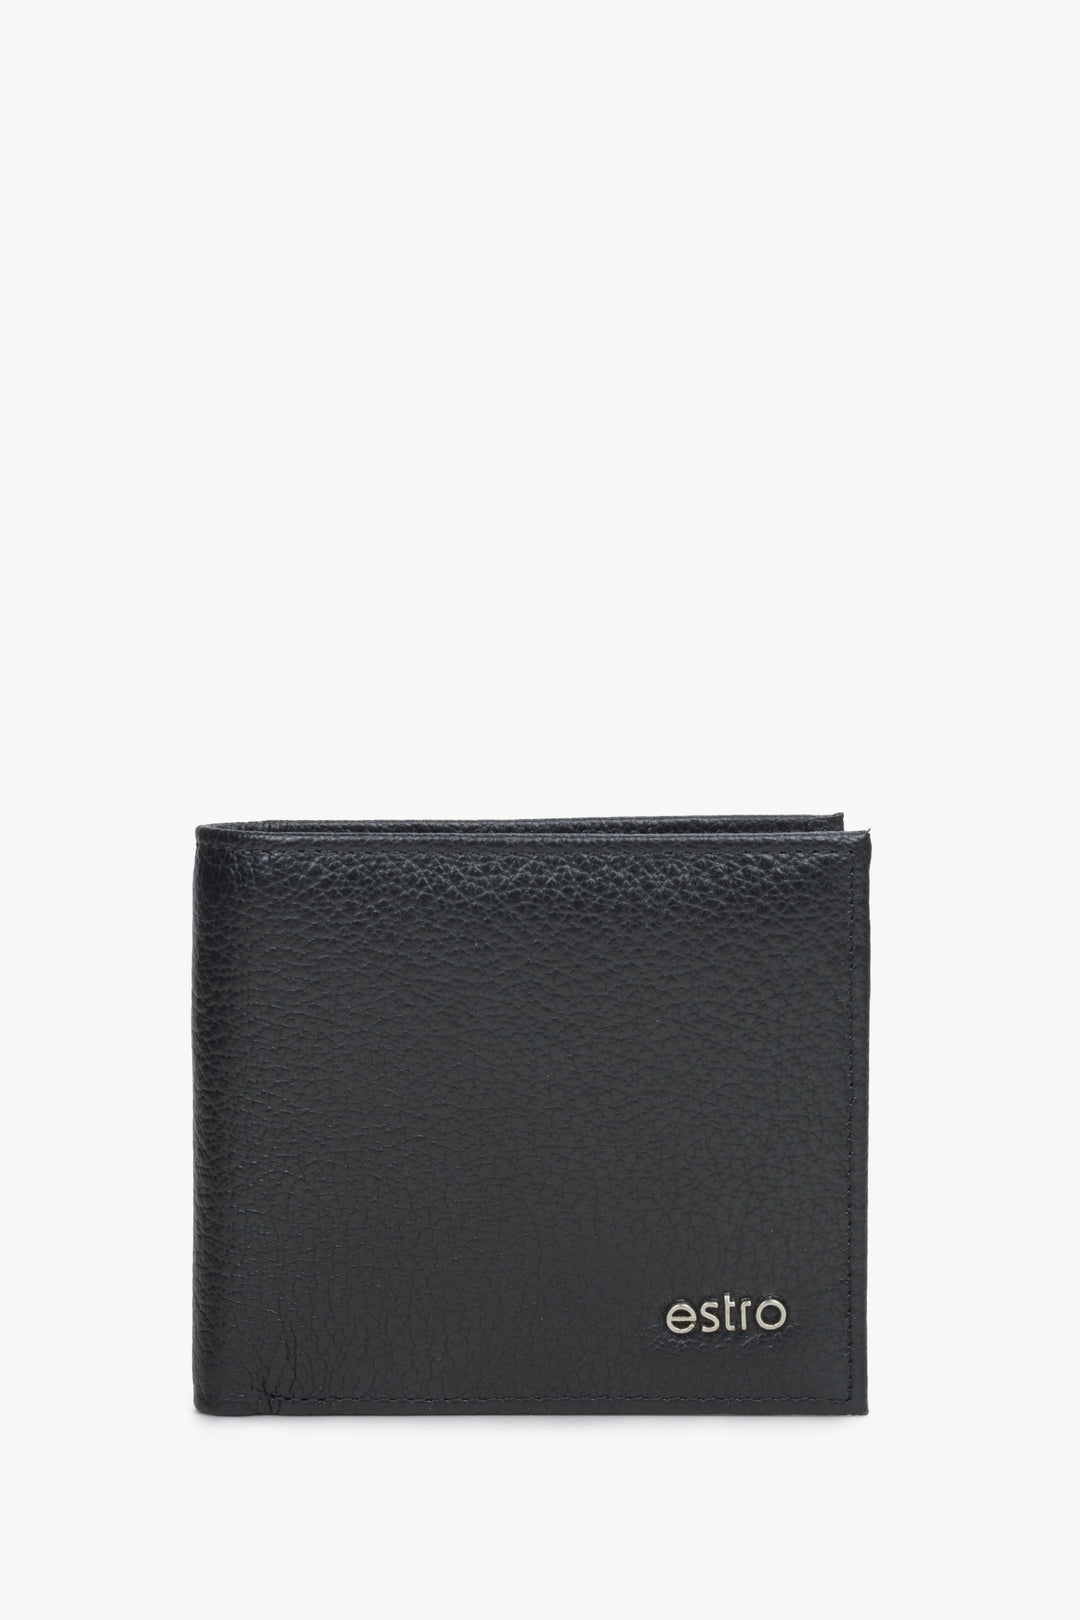 Men's Compact Black Wallet made of Genuine Leather Estro ER00114456.